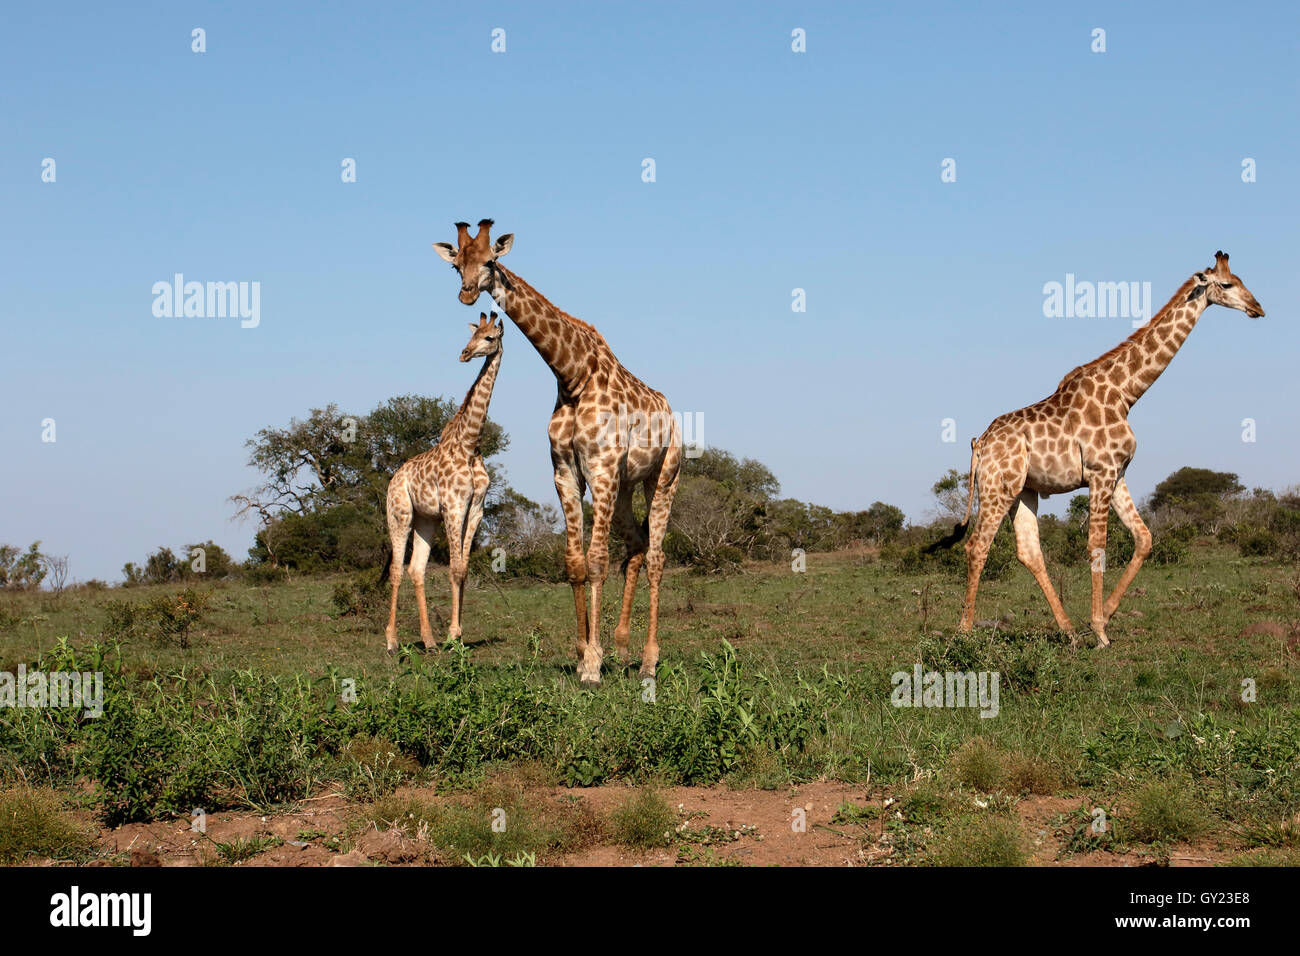 Girafe, Giraffa camelopardalis, trois mammifères, Namibie, août 2016 Banque D'Images